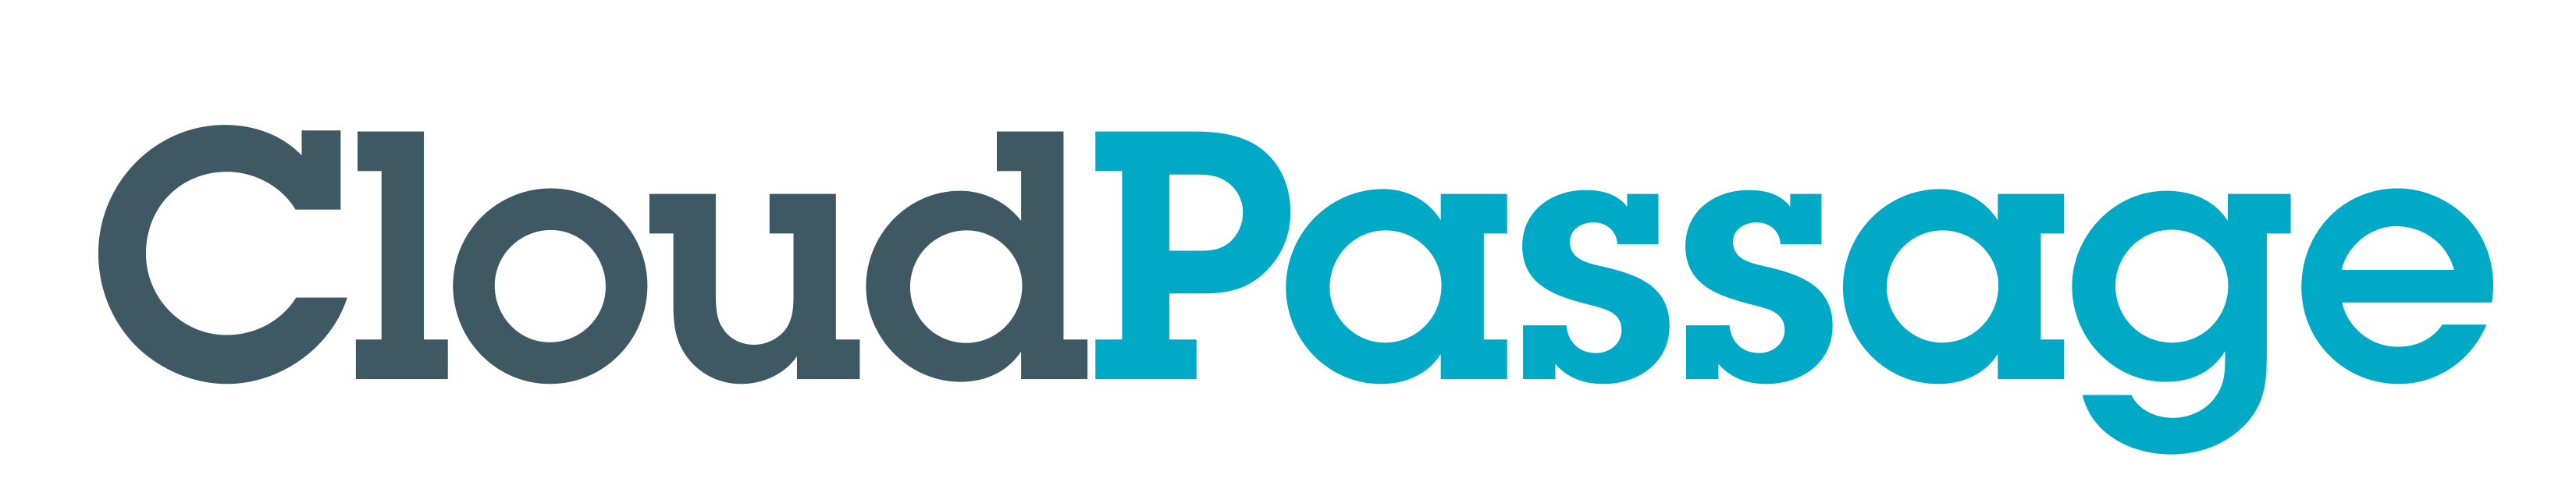 CloudPassage_logo.png